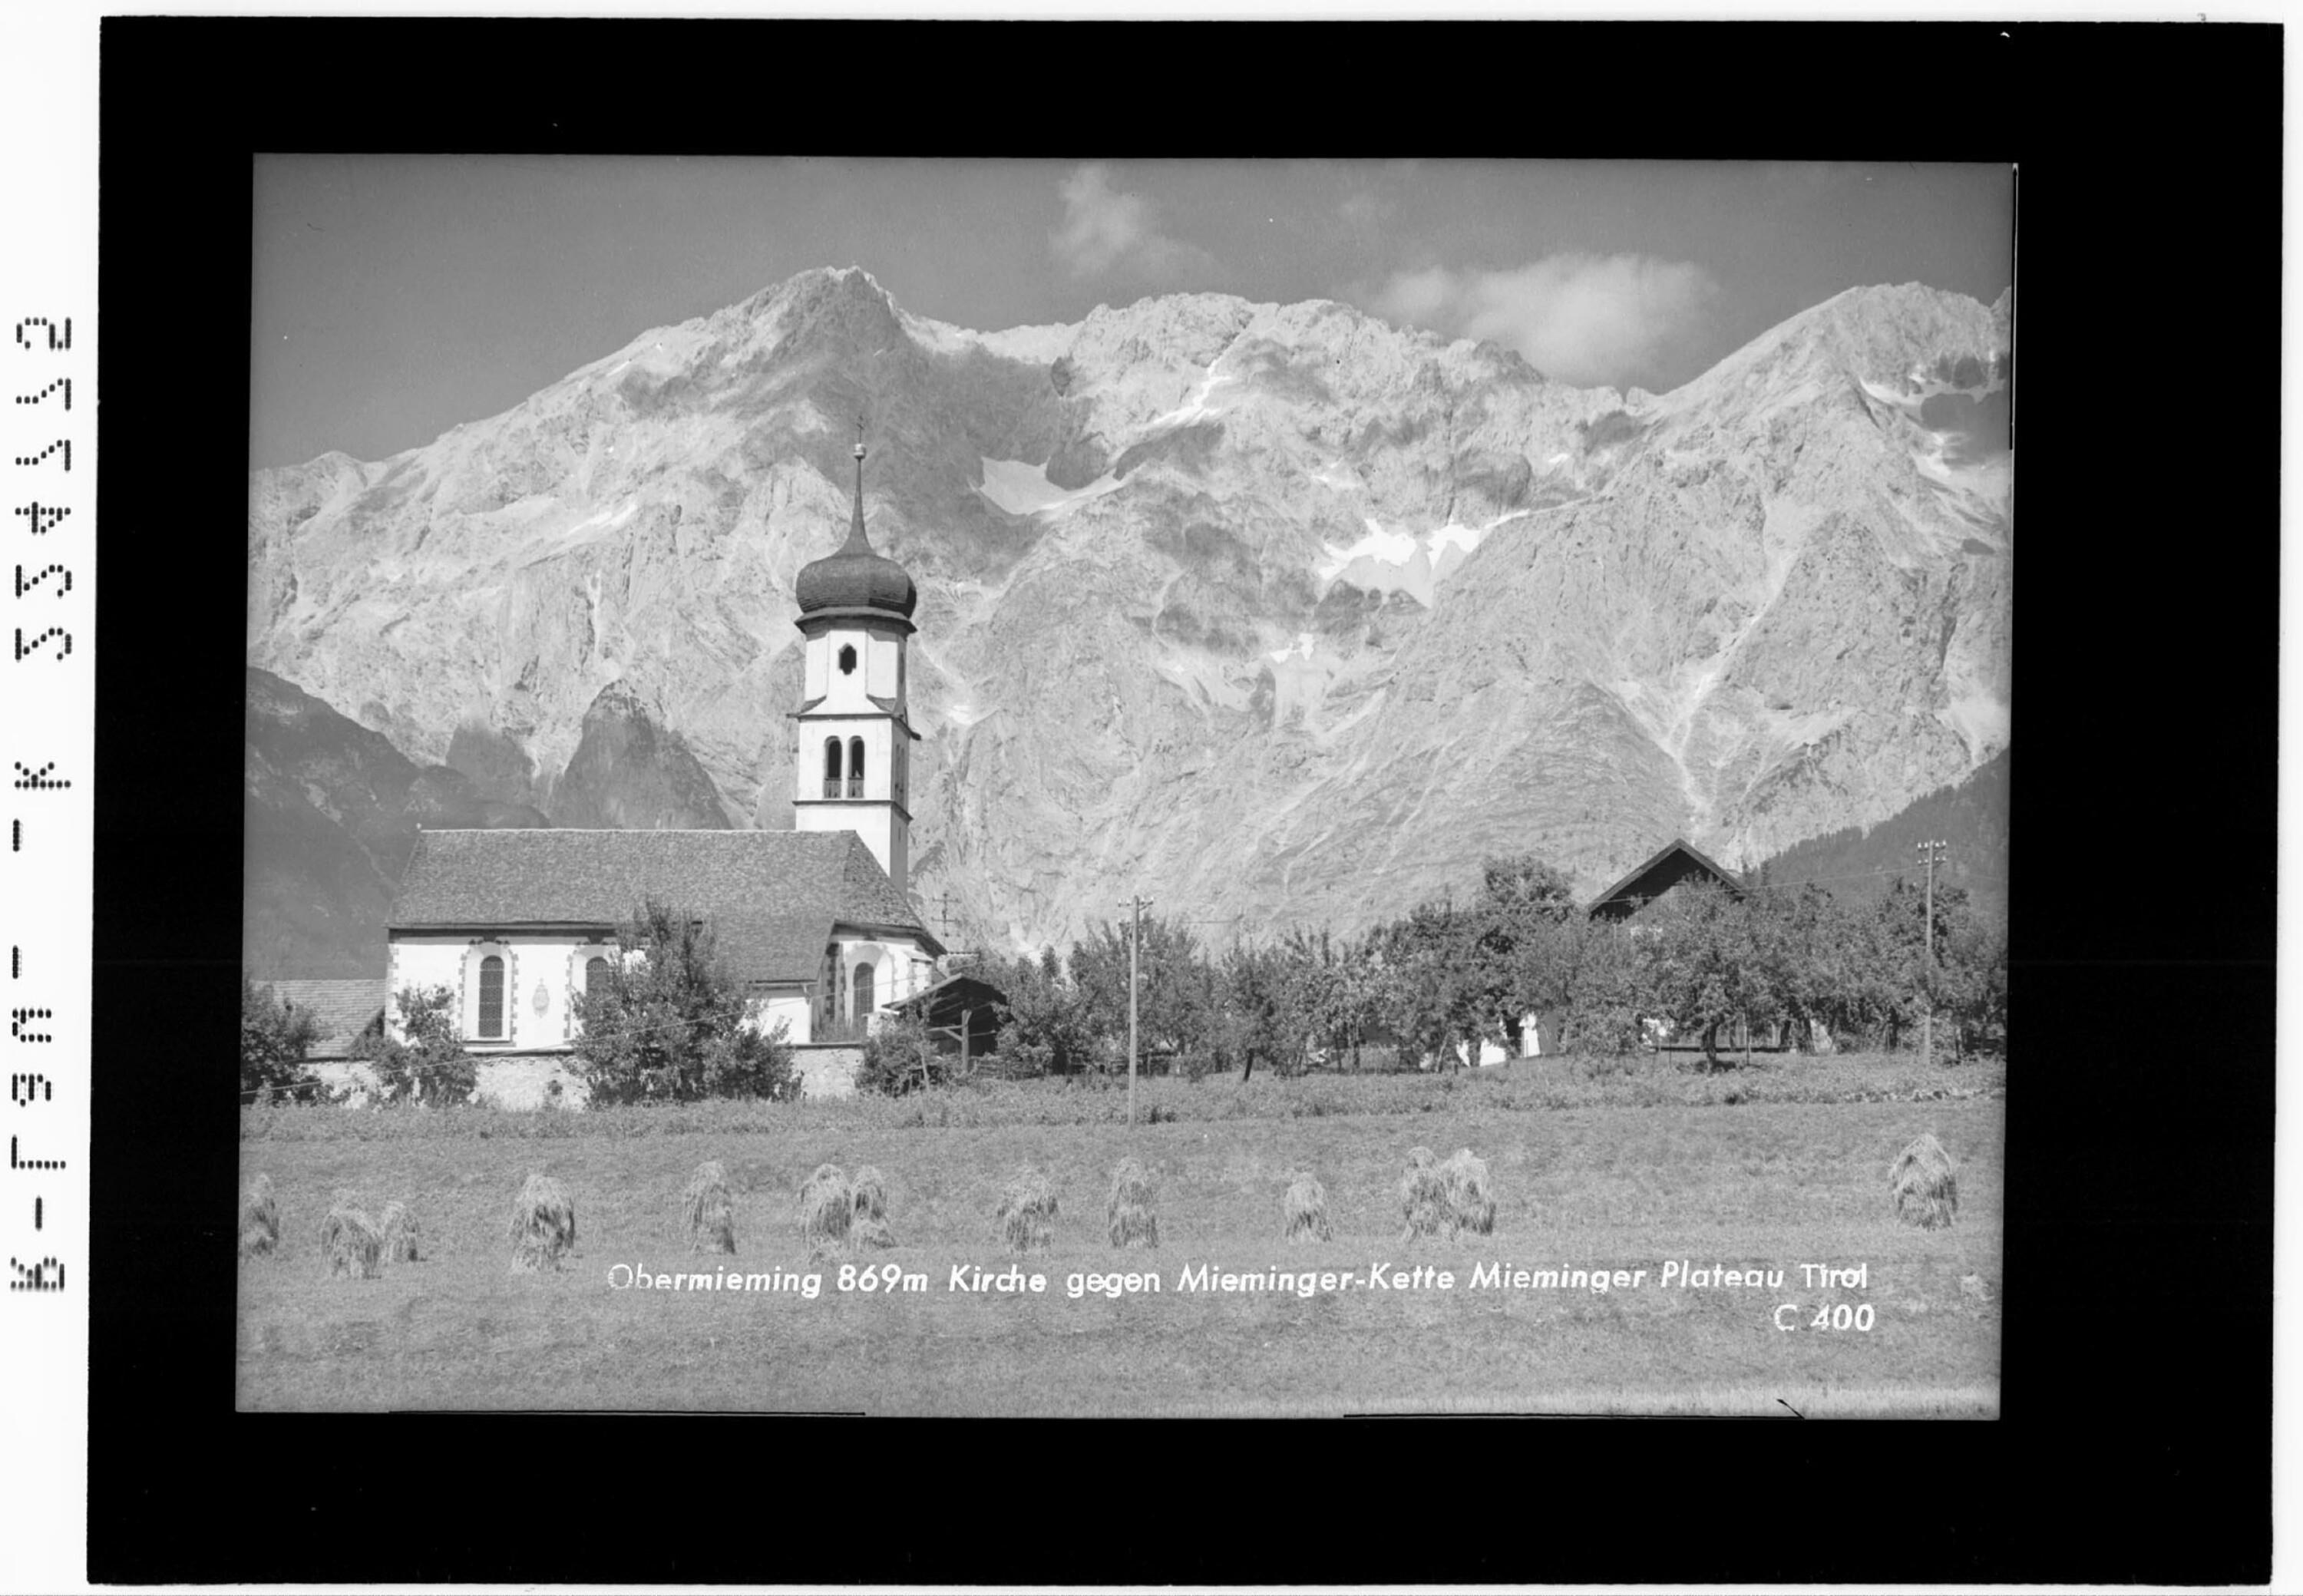 Obermieming - Kirche gegen Mieminger Kette / Mieminger Plateau / Tirol></div>


    <hr>
    <div class=